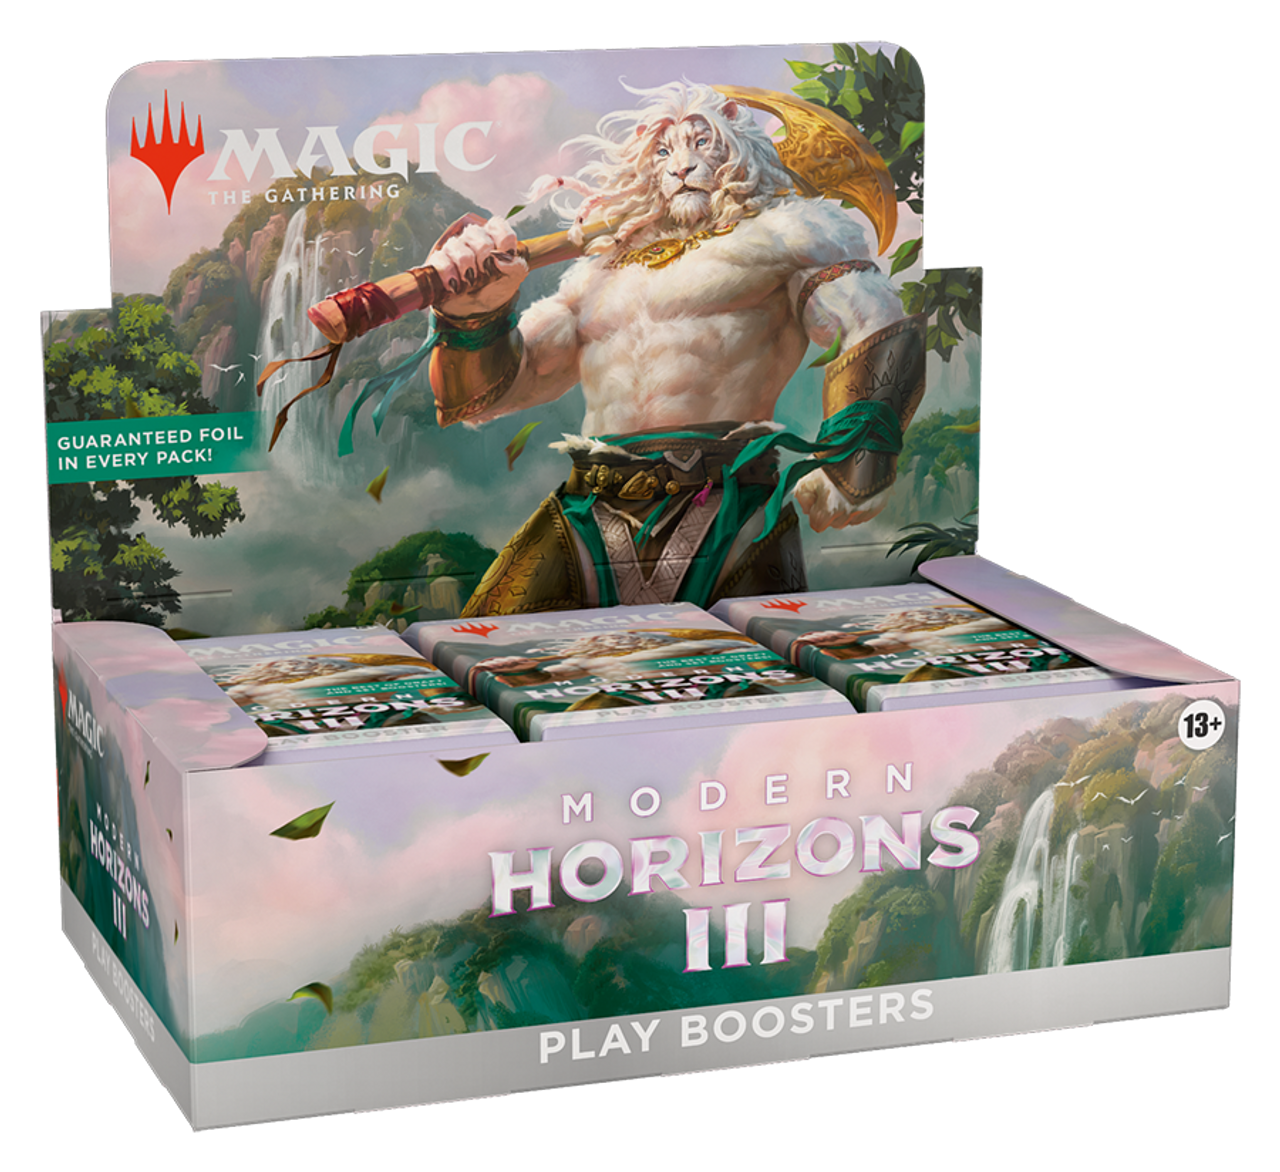 Magic The Gathering: Modern Horizons 3 Play Booster Box